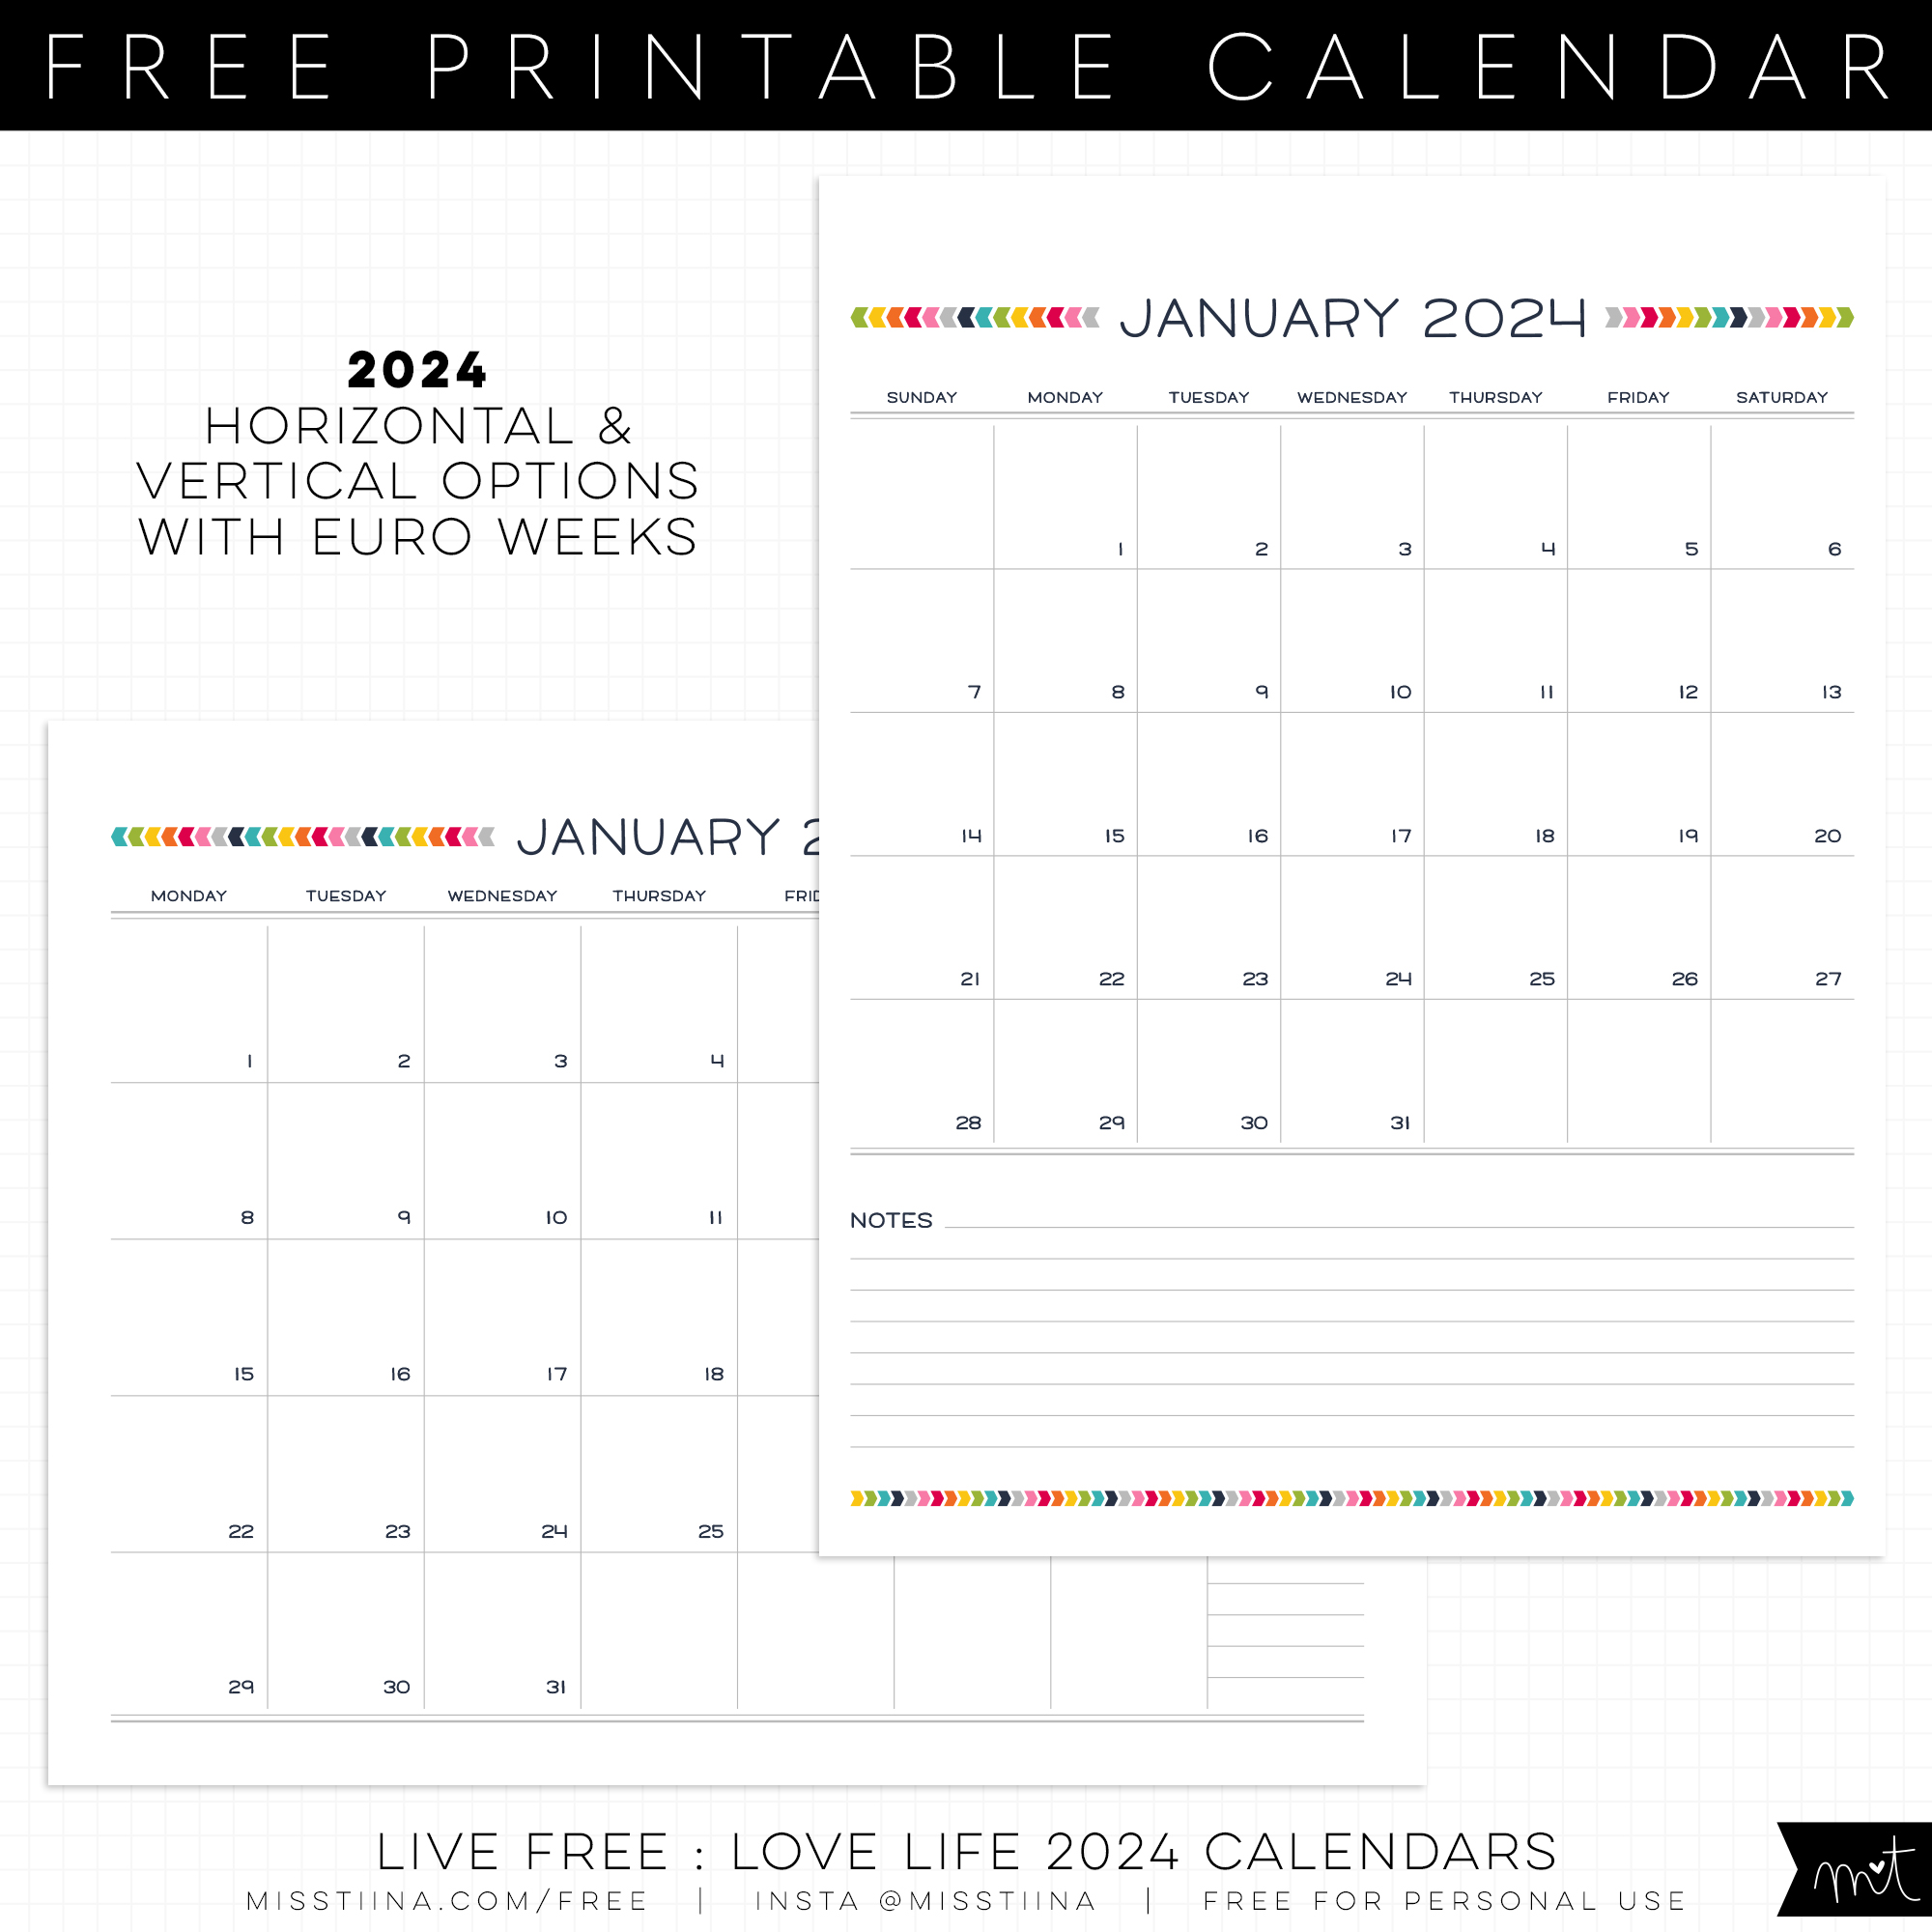 Live Free : Love Life 2024 Calendars